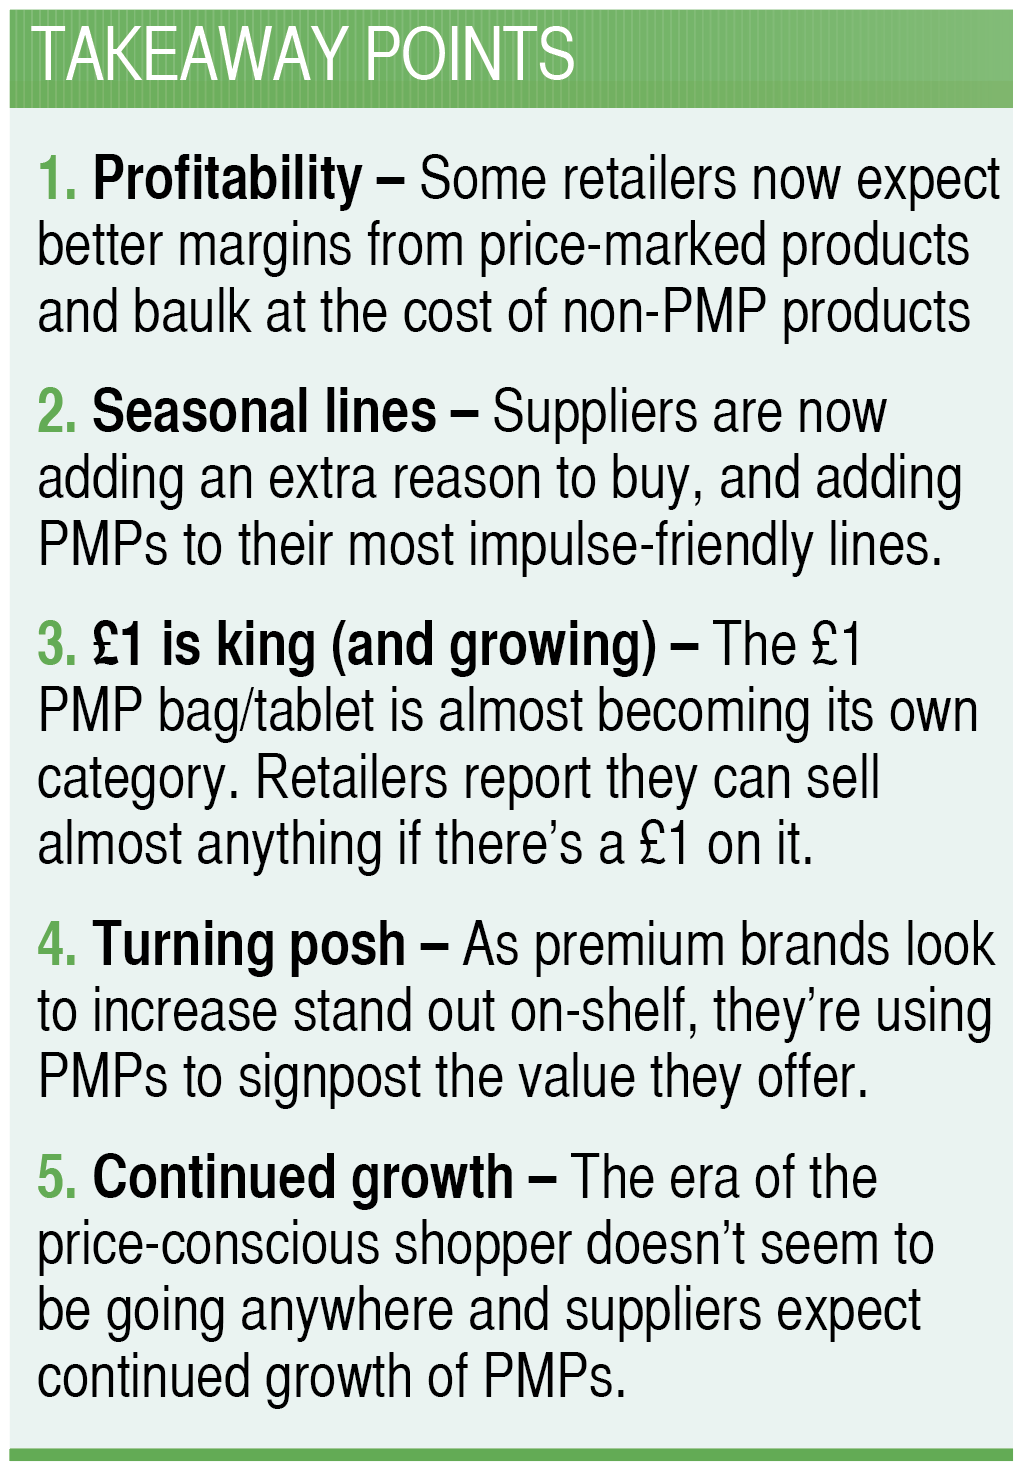 PMPs growth versus non-PMP formats